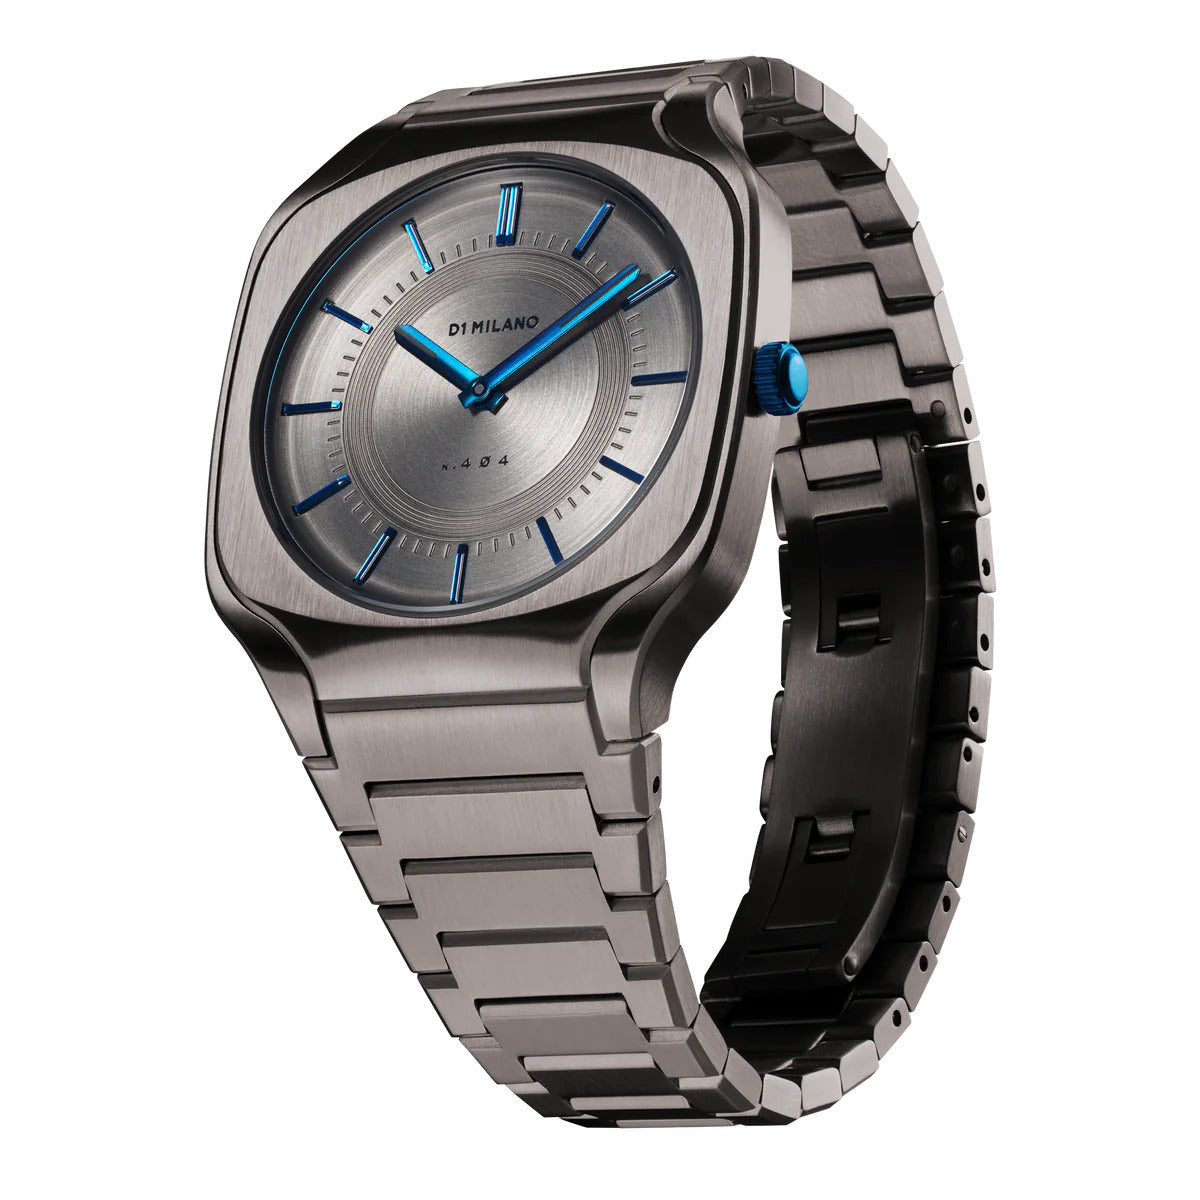 D1 Milano Men's Quartz Watch, Gray Dial - ML-0280